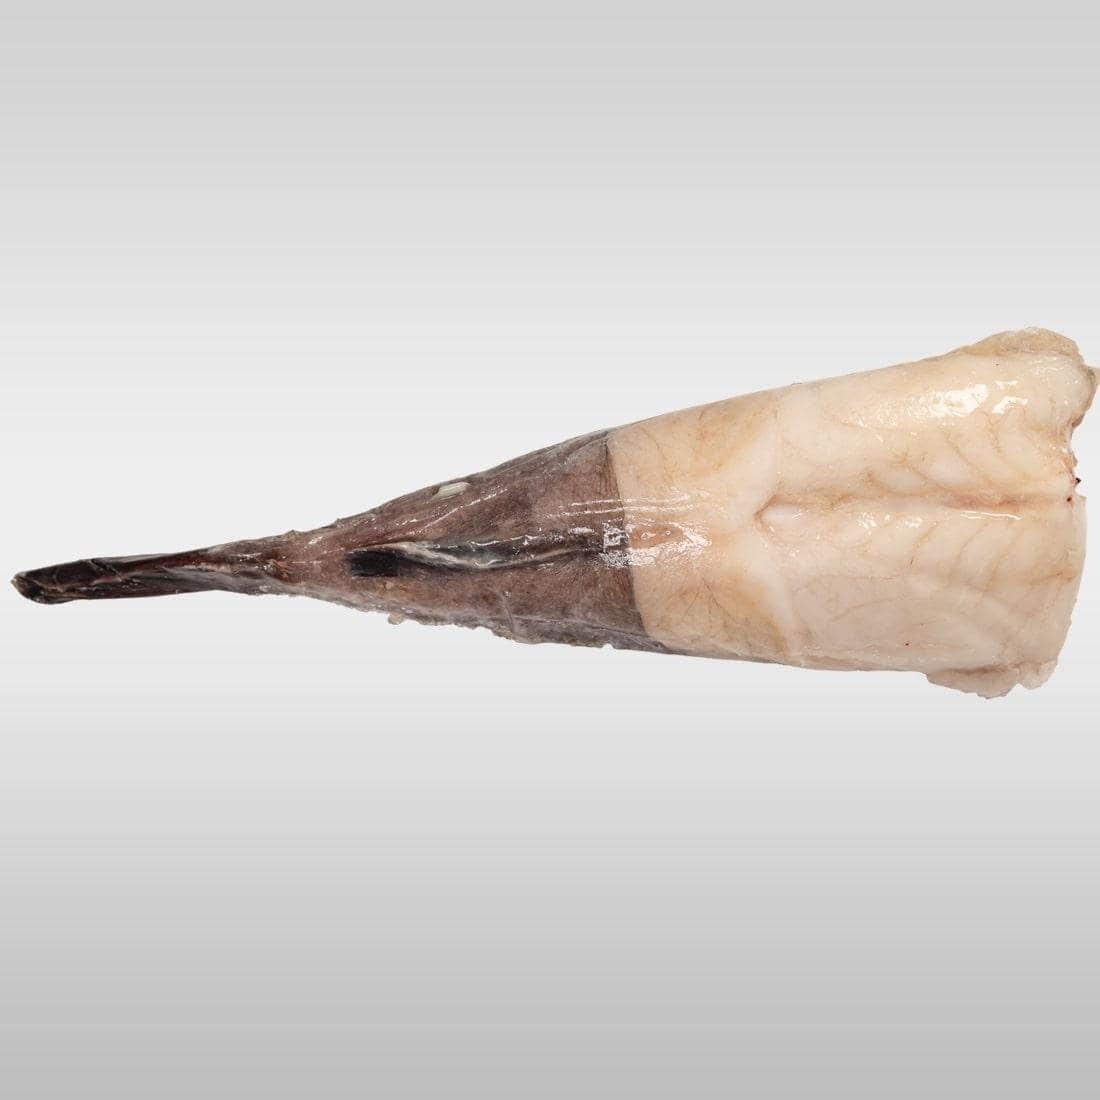 Image 0 of Monkfish tails